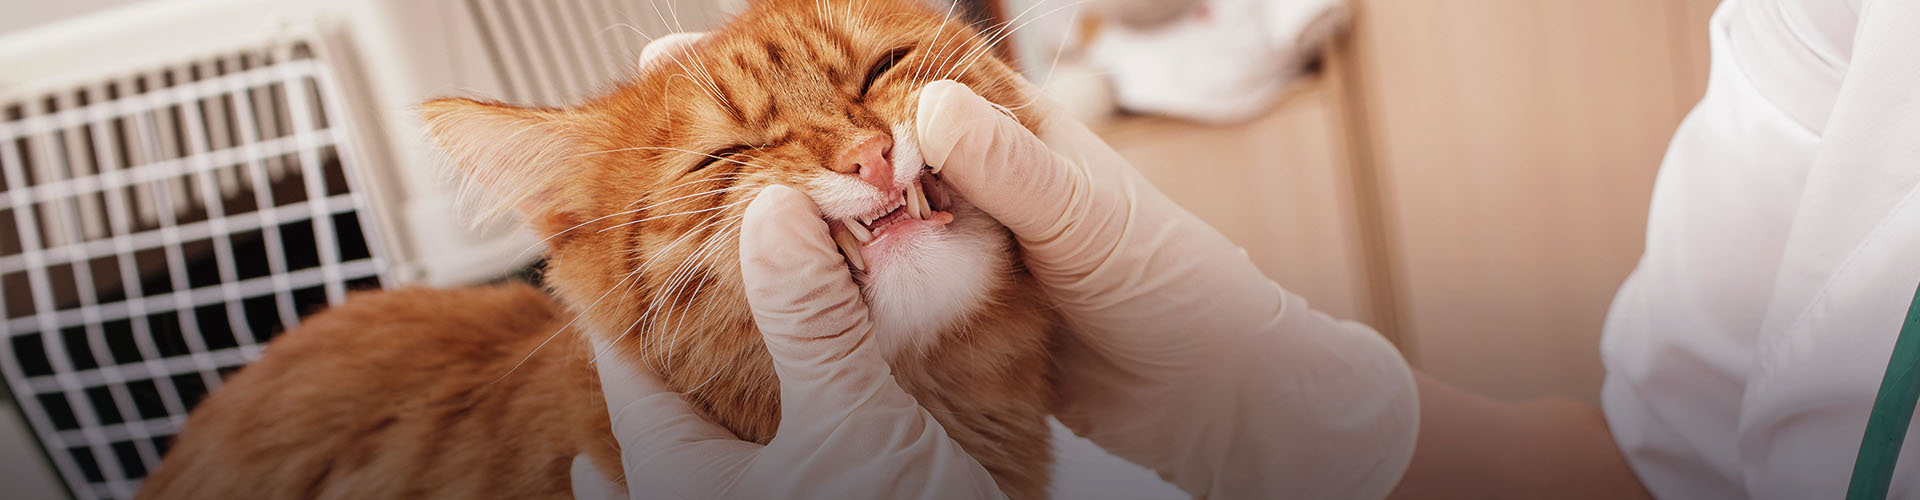 doctor examining sick cat